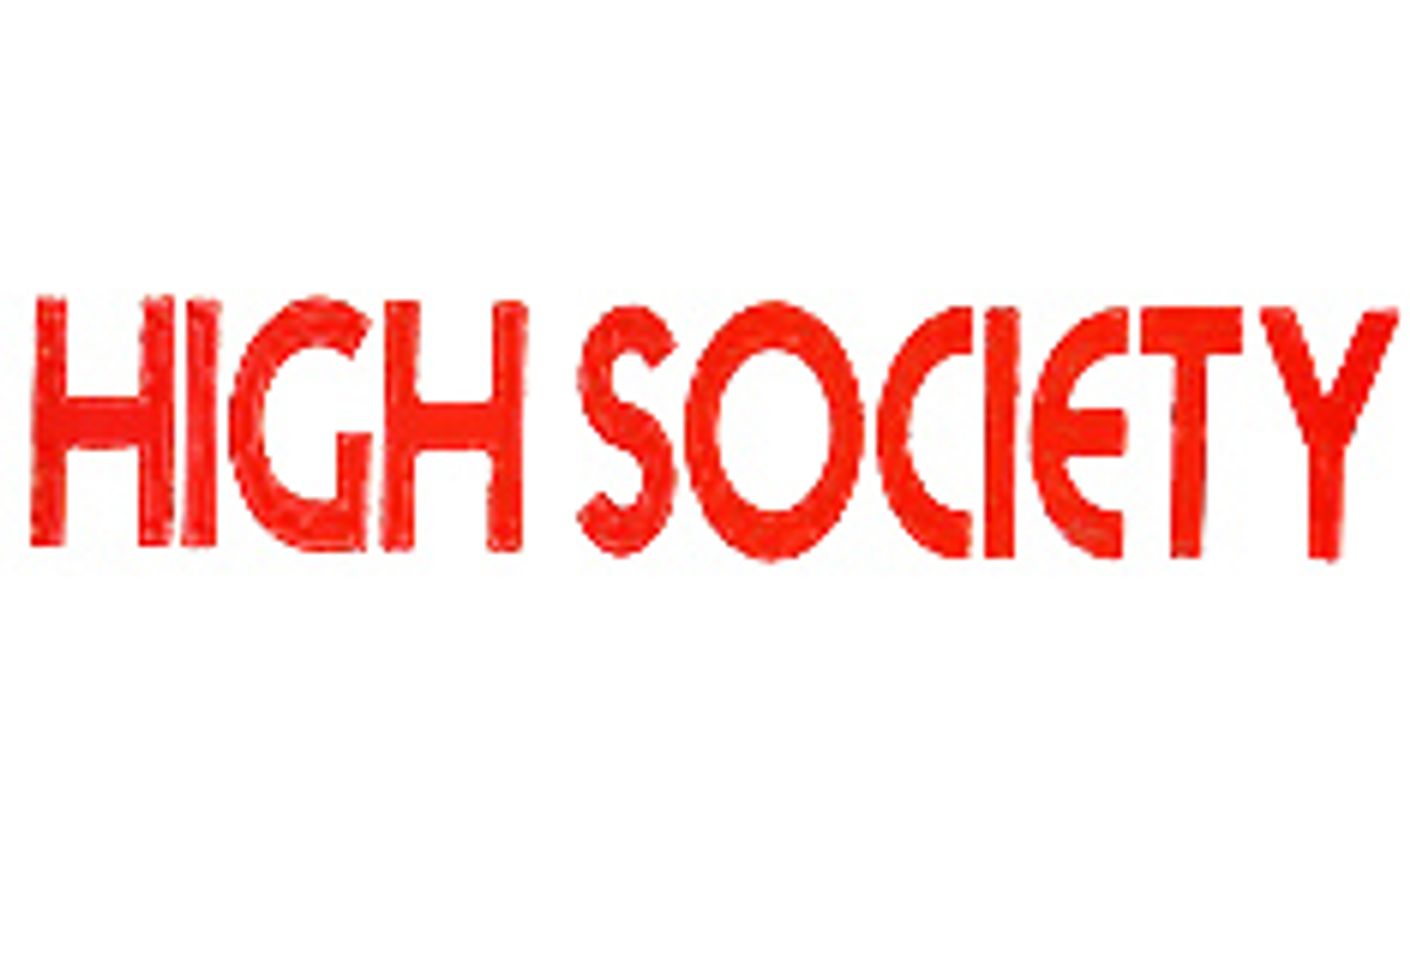 HIGH SOCIETY Magazine Celebrates 33rd Anniversary